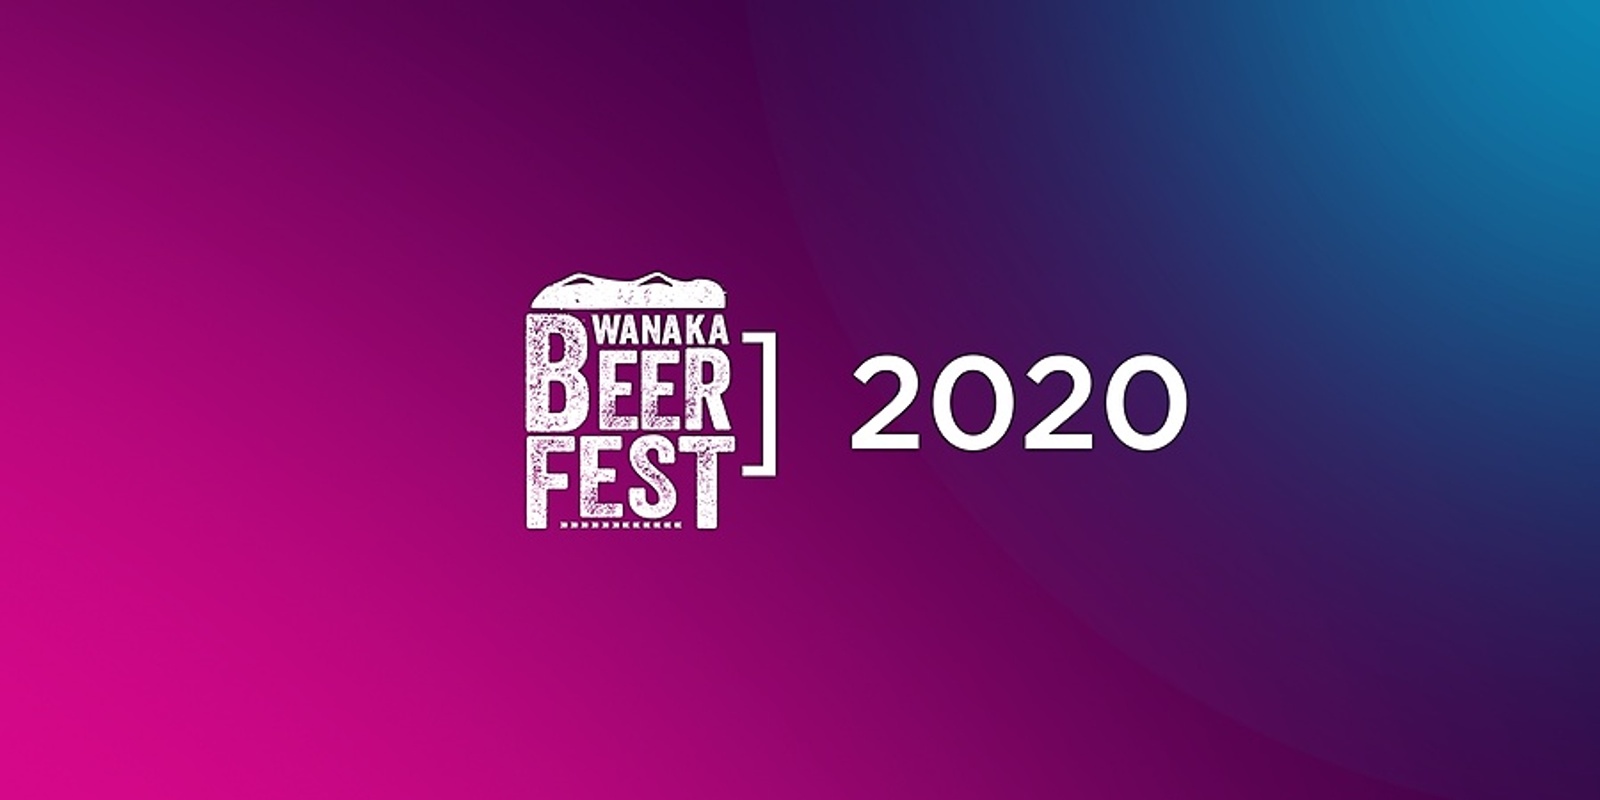 Banner image for Wanaka Beer Festival 2020